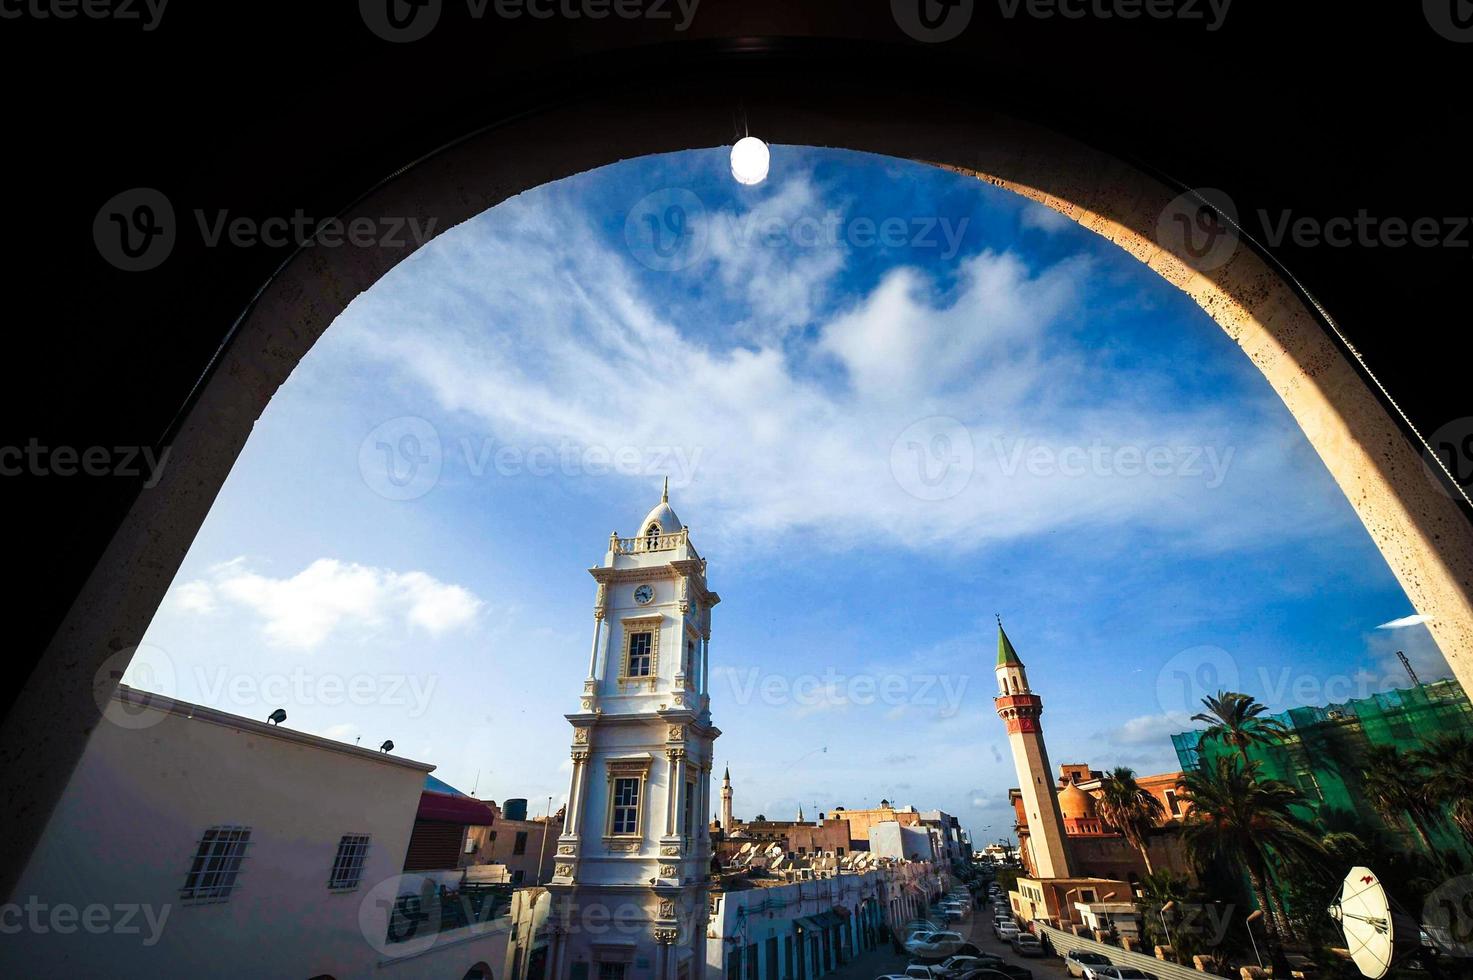 Italiaanse klokkentoren in de medina van tripoli / Libië foto